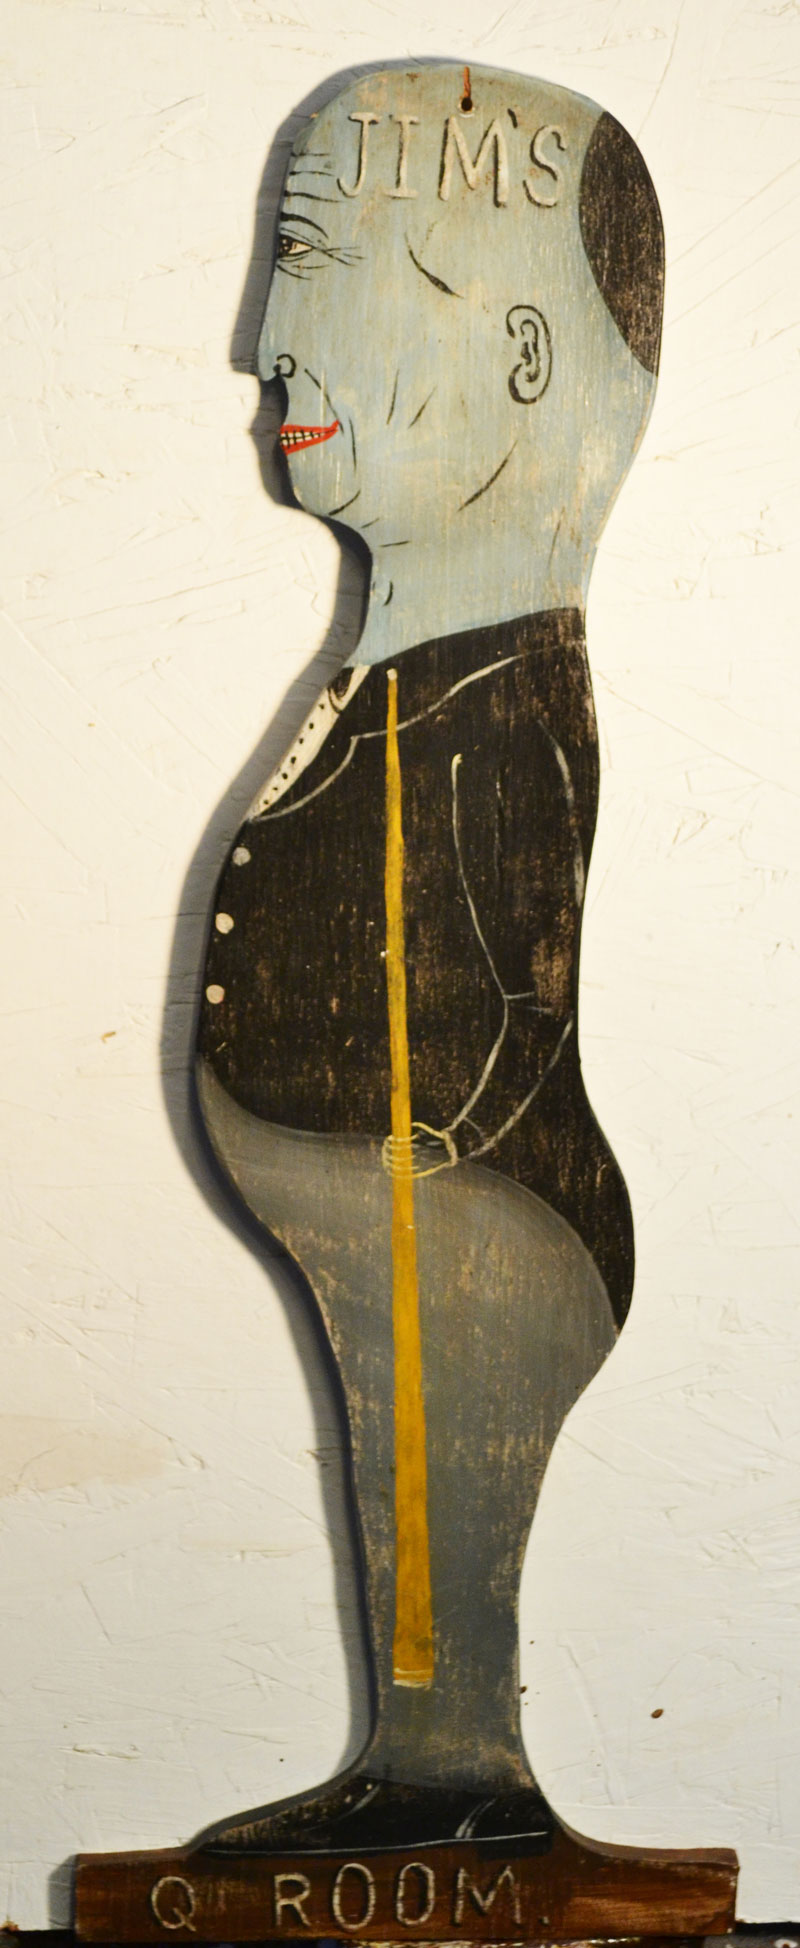 Fred Stonehouse, Q-room, 2012, acrylic on plywood, 58x22 cm